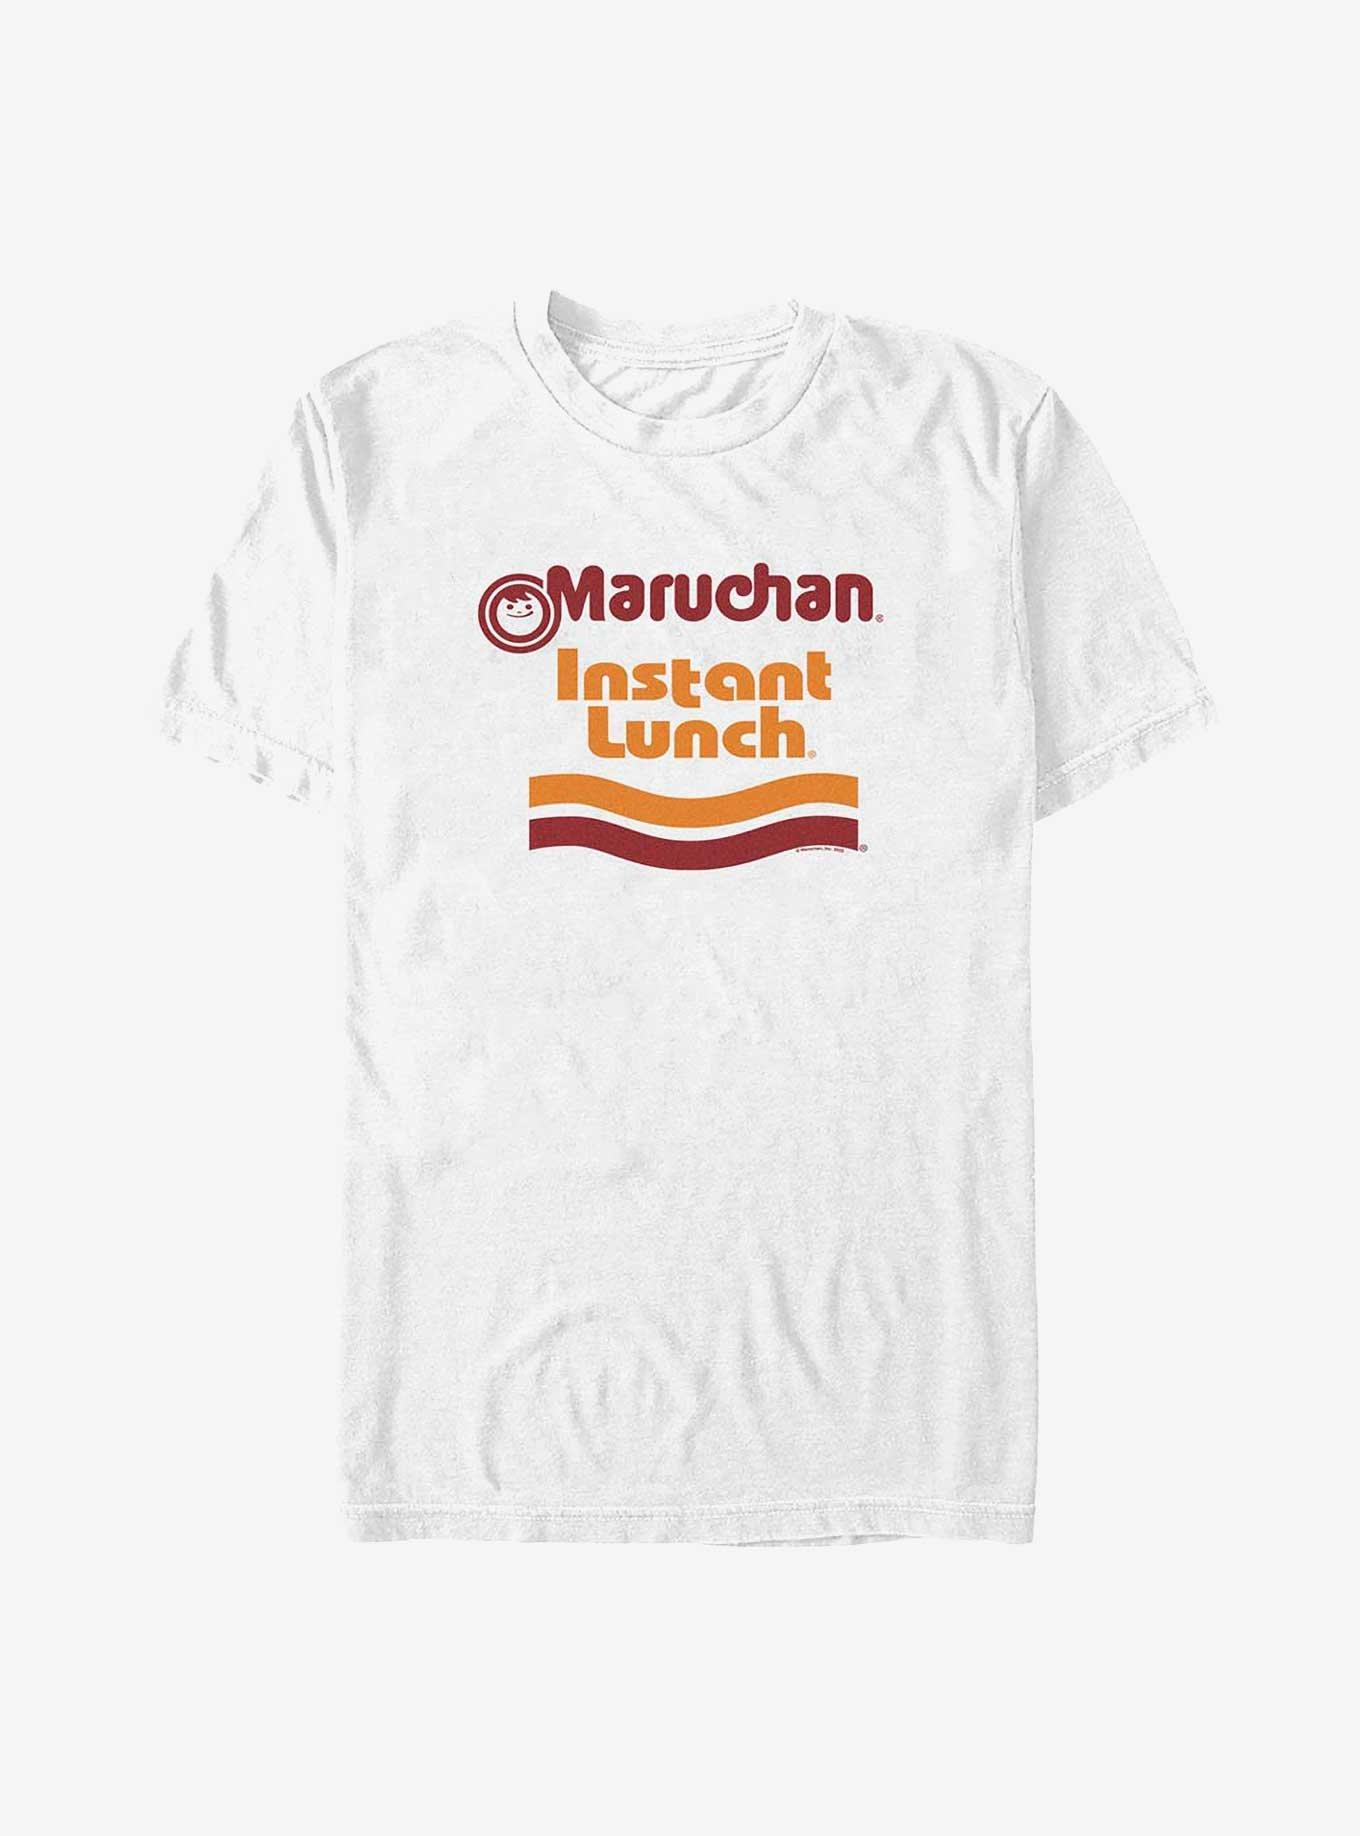 Maruchan Instant Lunch-25 T-Shirt